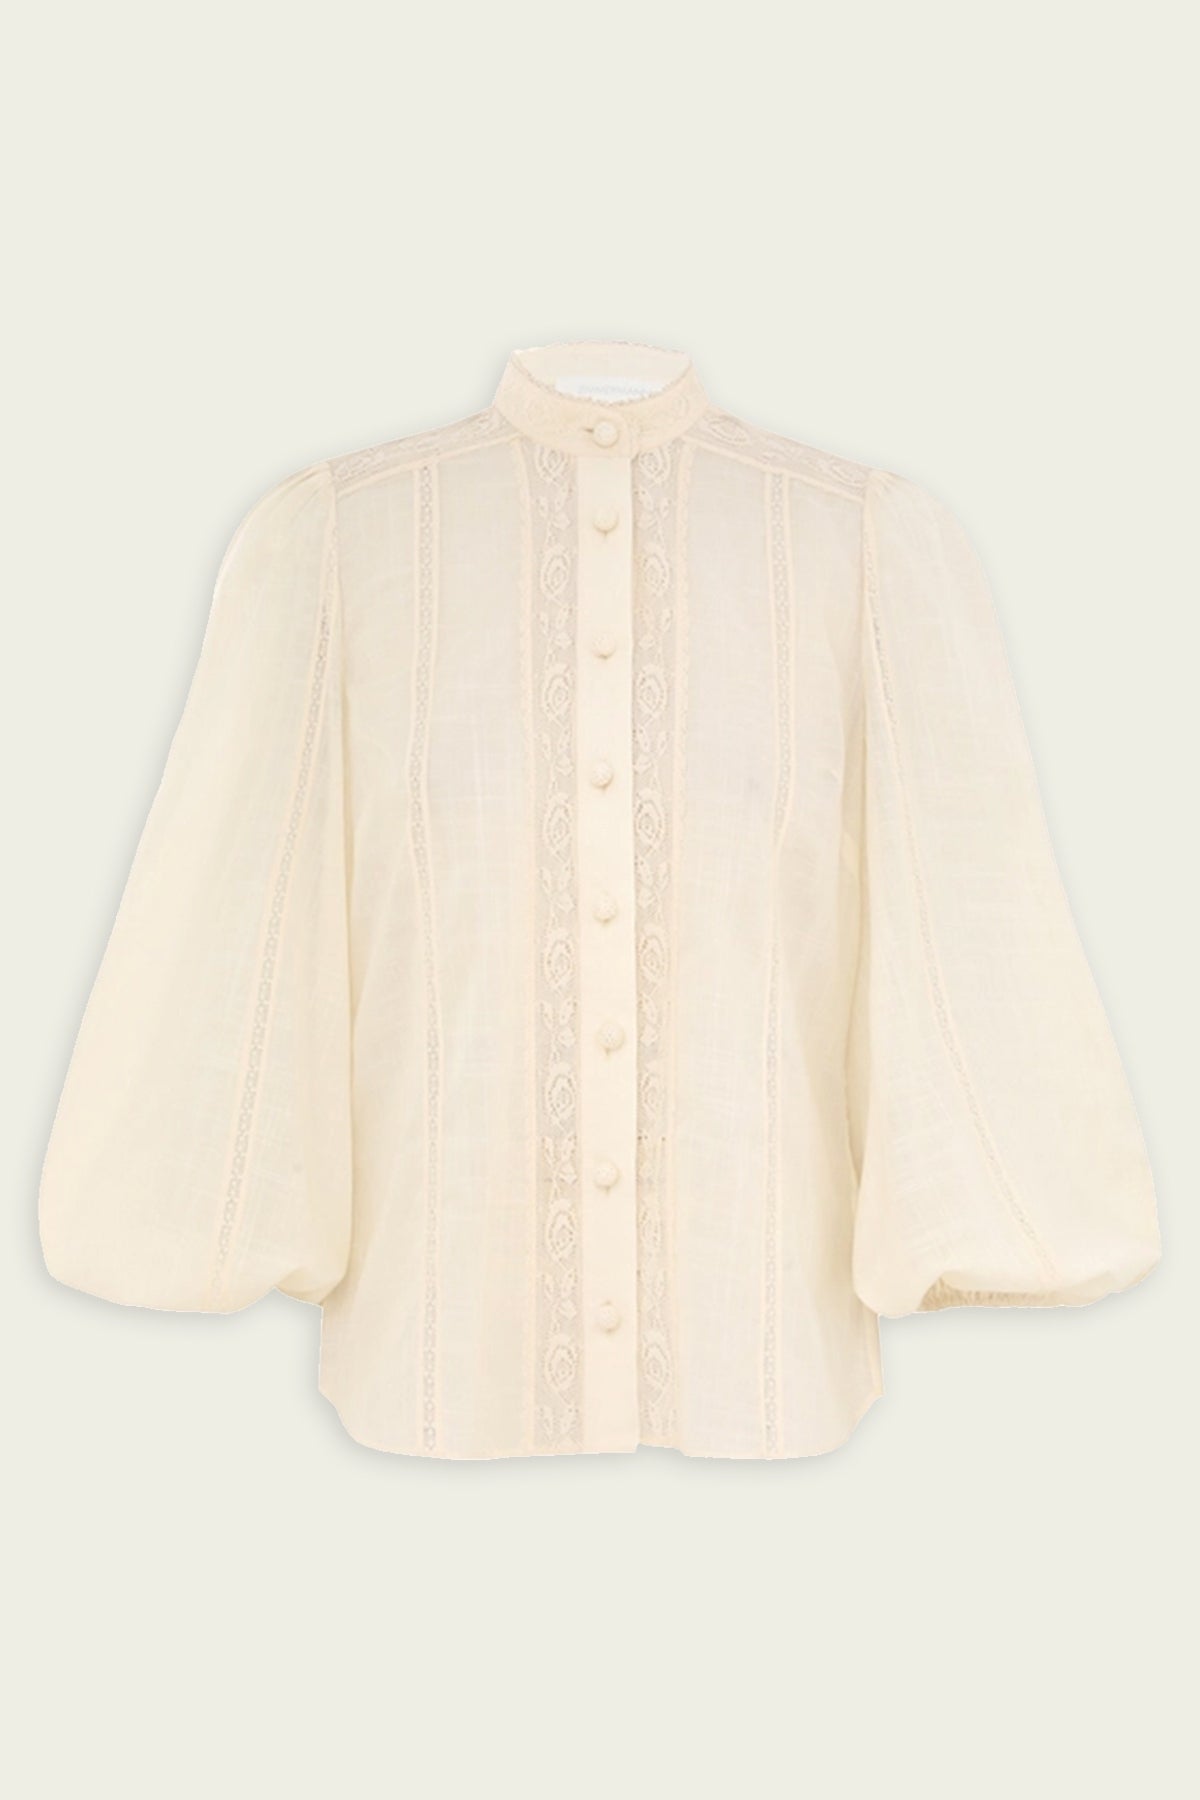 Halliday Lace Trim Shirt in Cream - shop - olivia.com